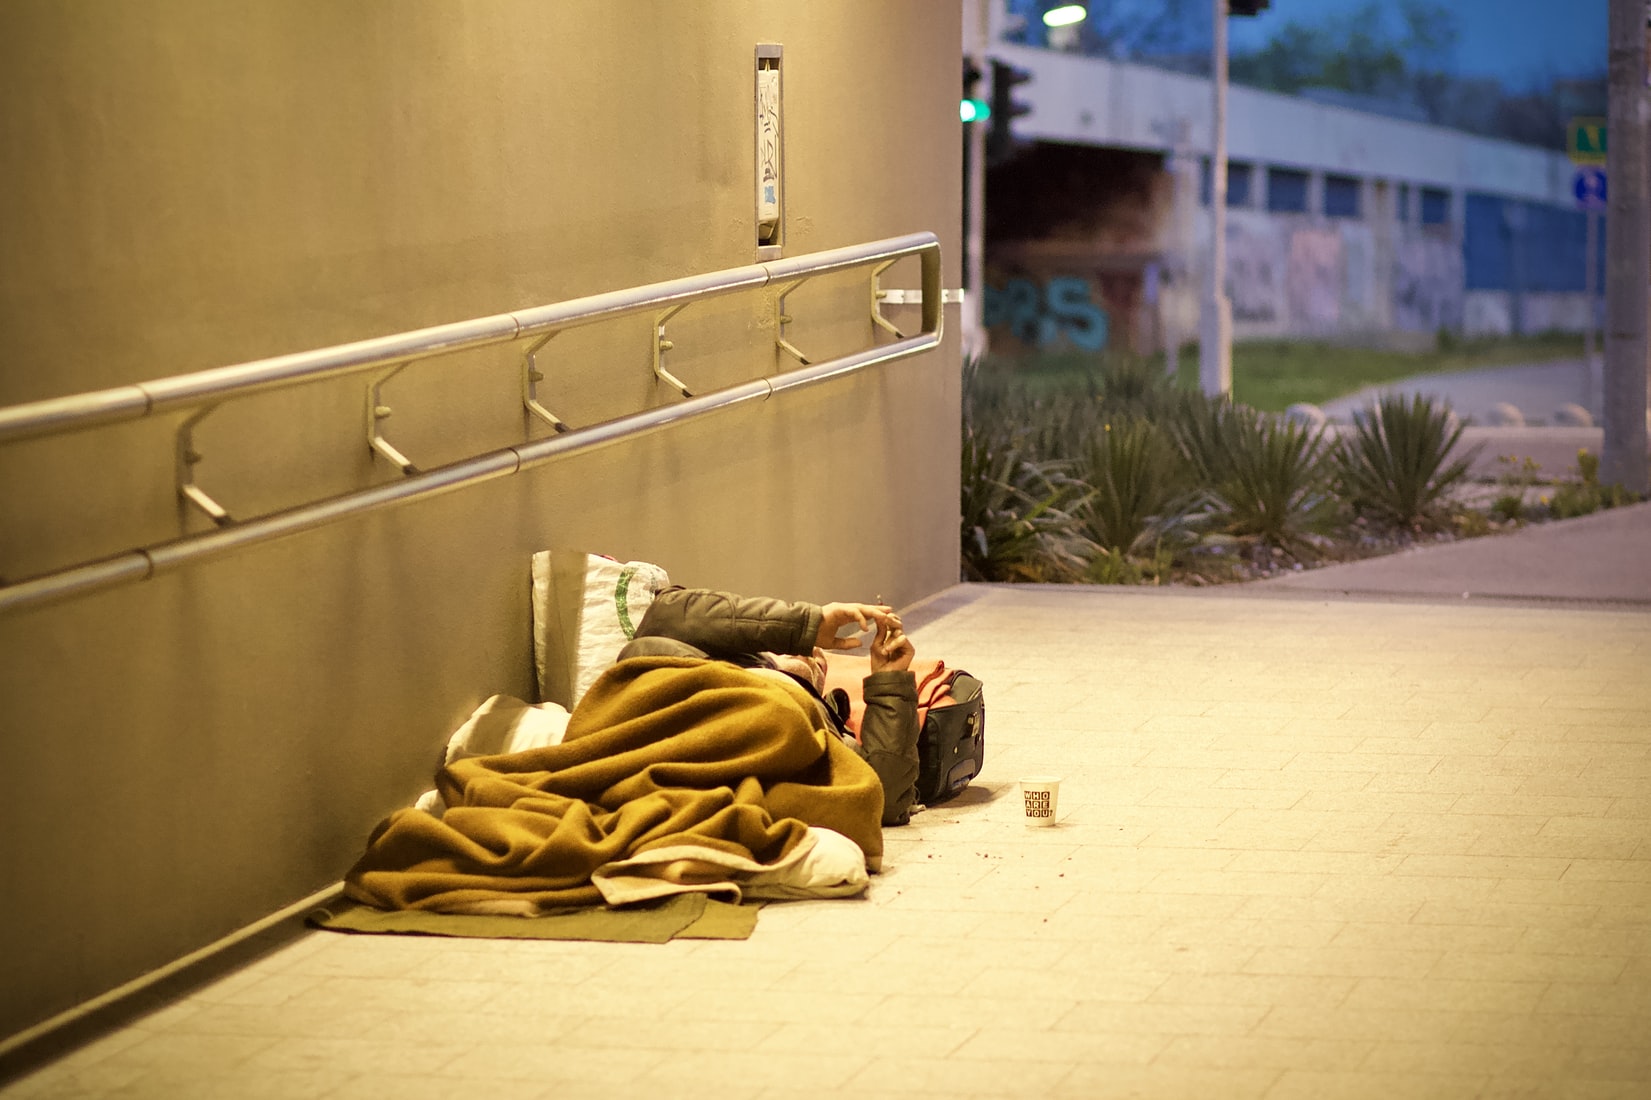 Homeless person sleeping on sidewalk